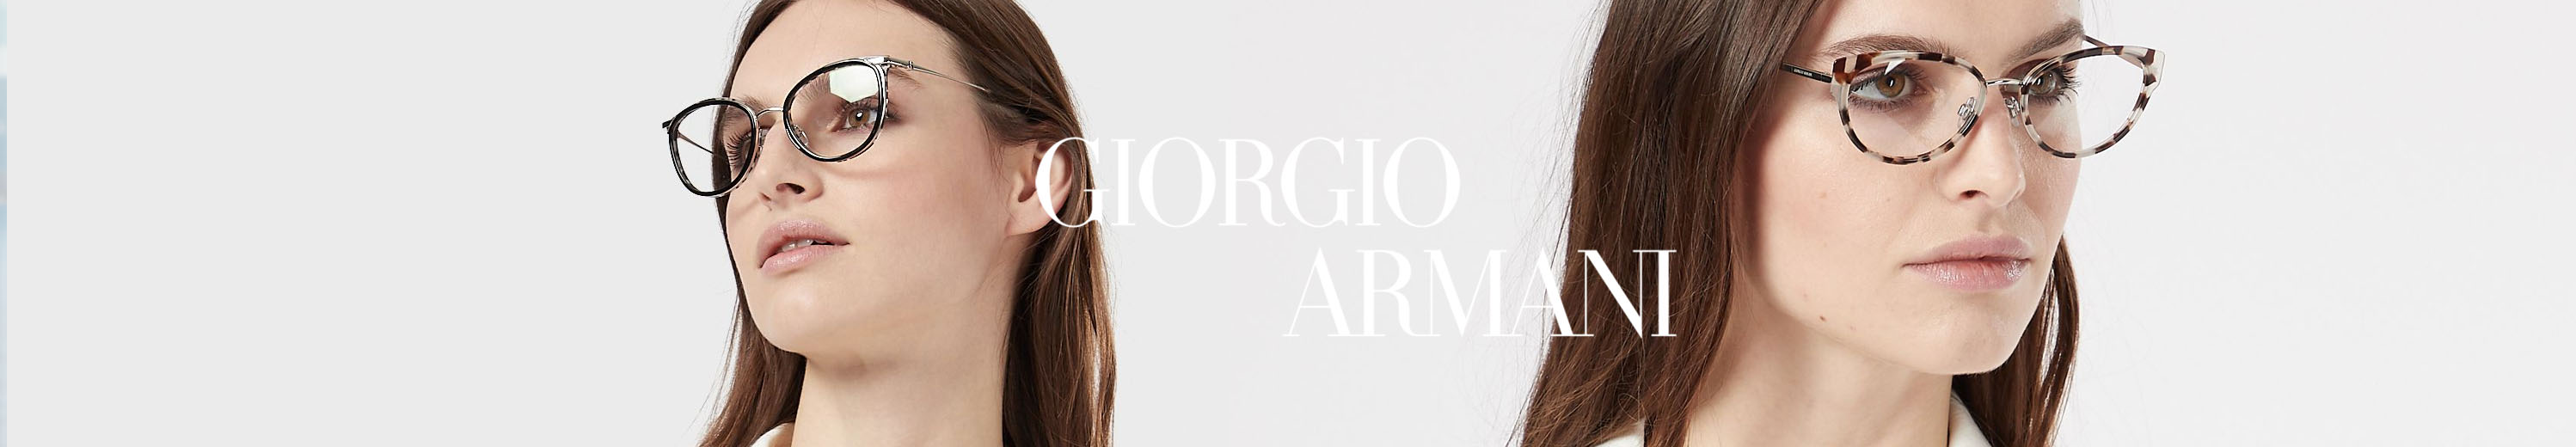 Giorgio Armani Eyeglasses for Women